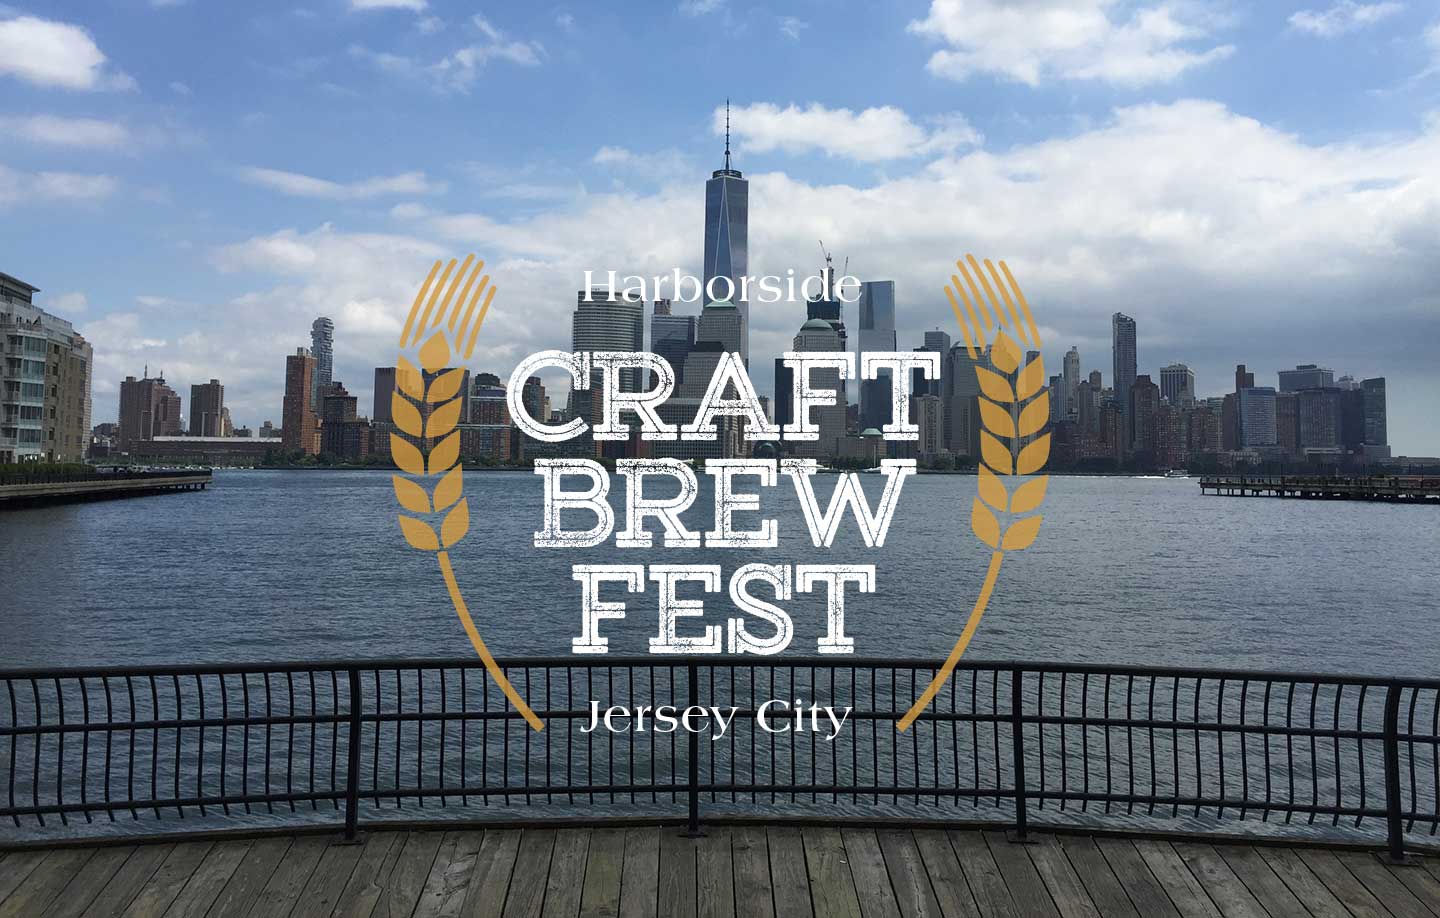 jersey city harborside craft beer fest 2016